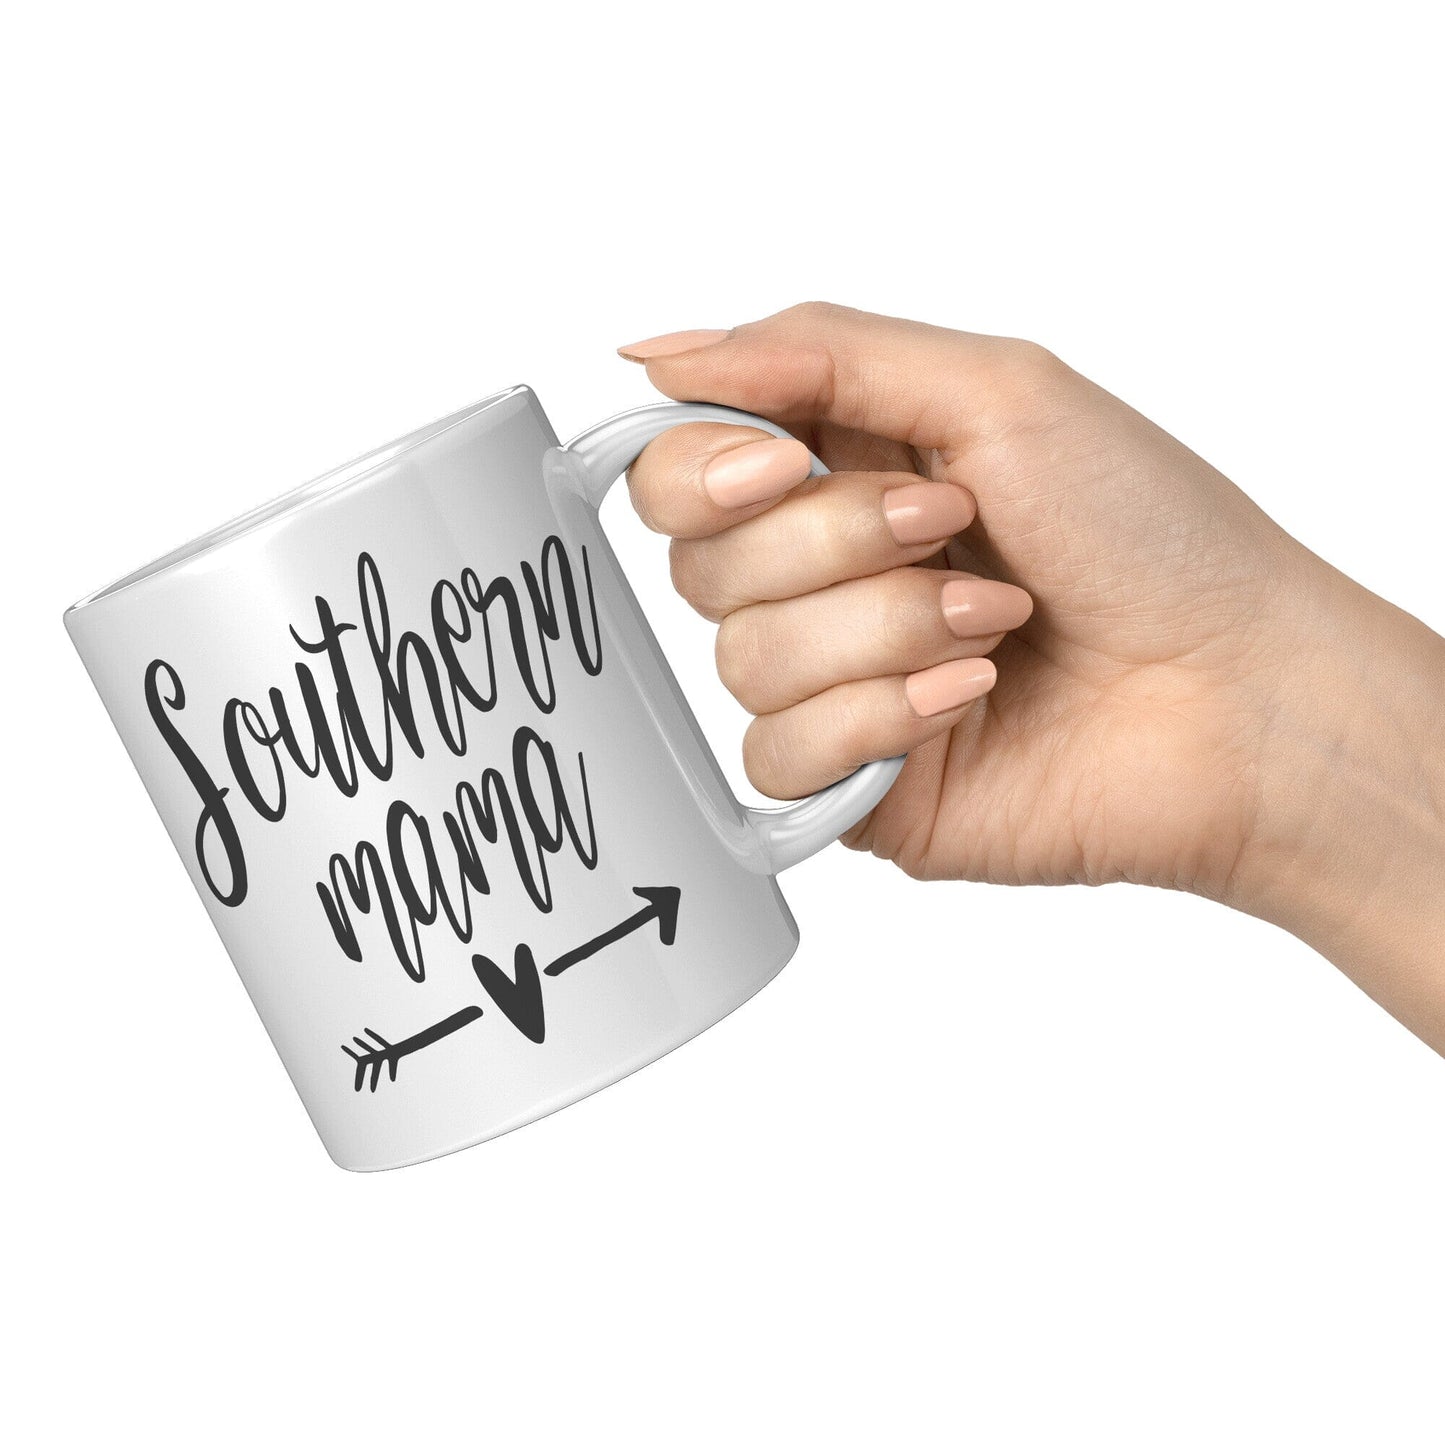 Southern Mama - Coffee Mug